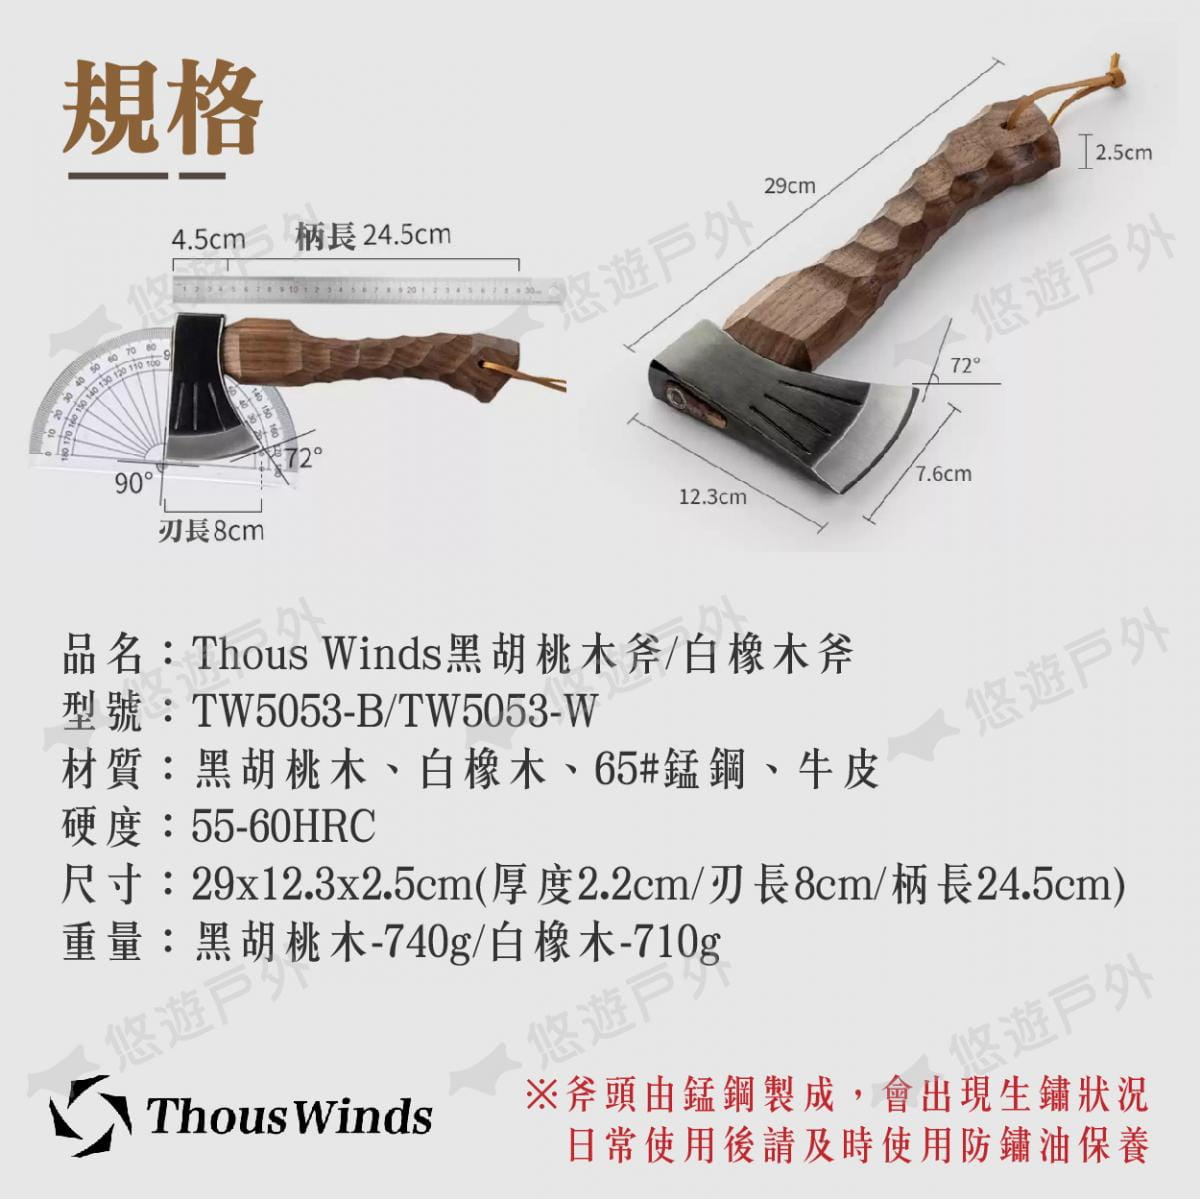 【Thous Winds】黑胡桃木錳鋼斧 TW5053-B (悠遊戶外) 8